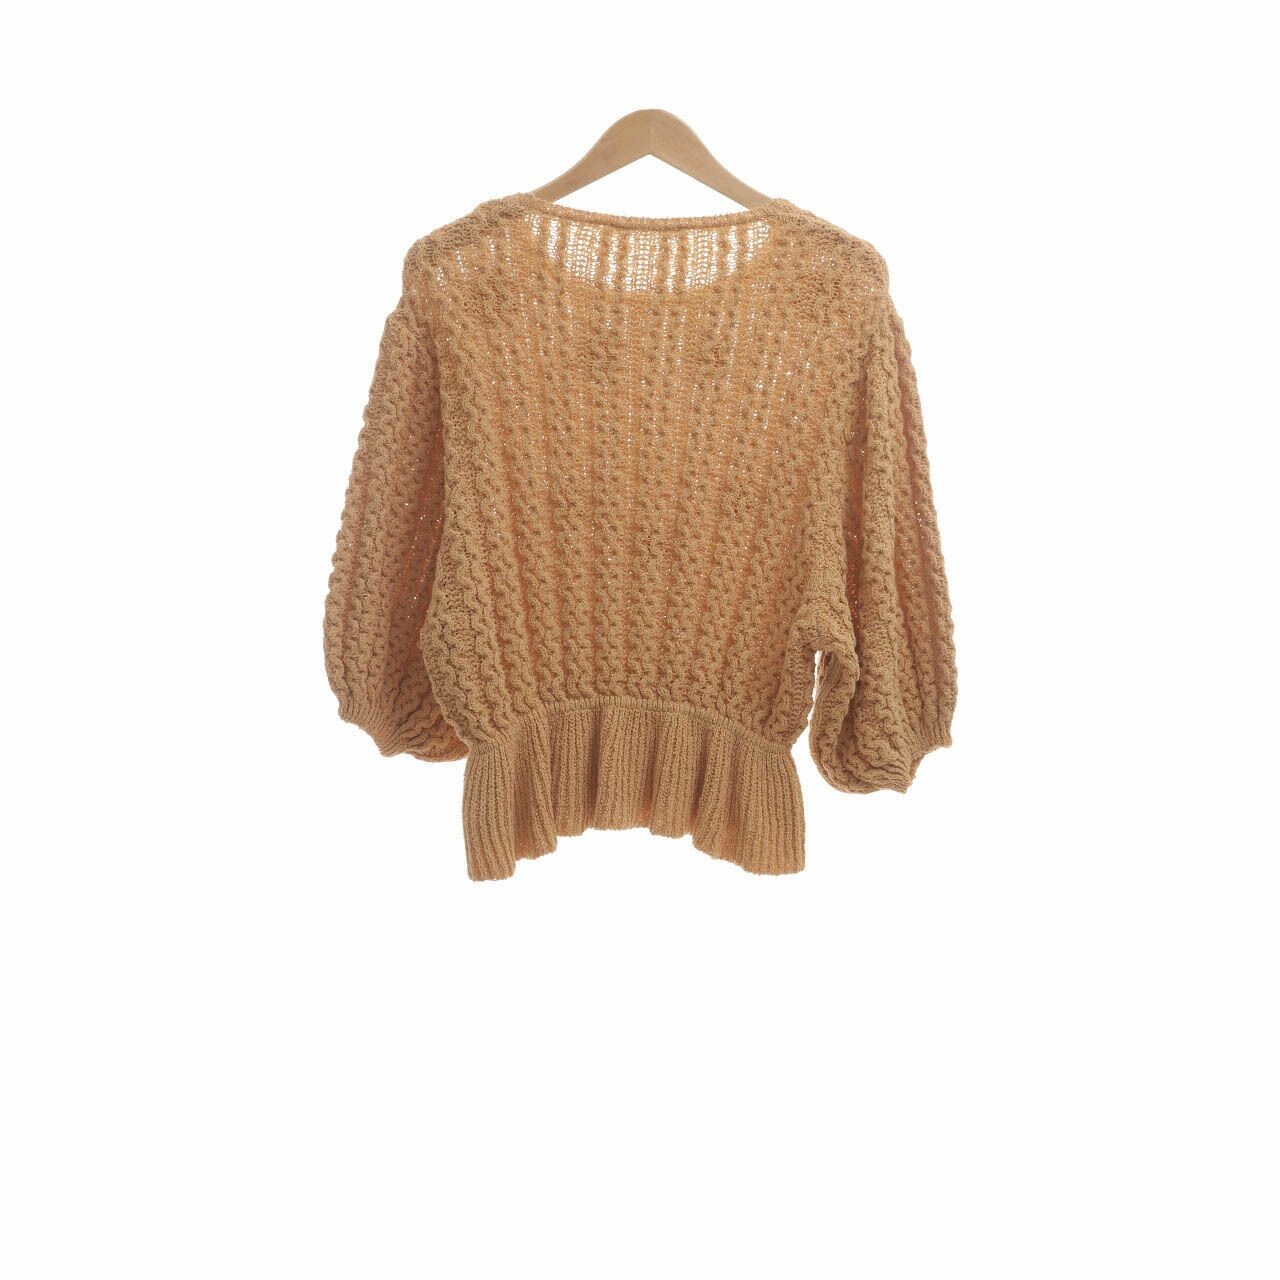 Zara Mustard Knit Blouse